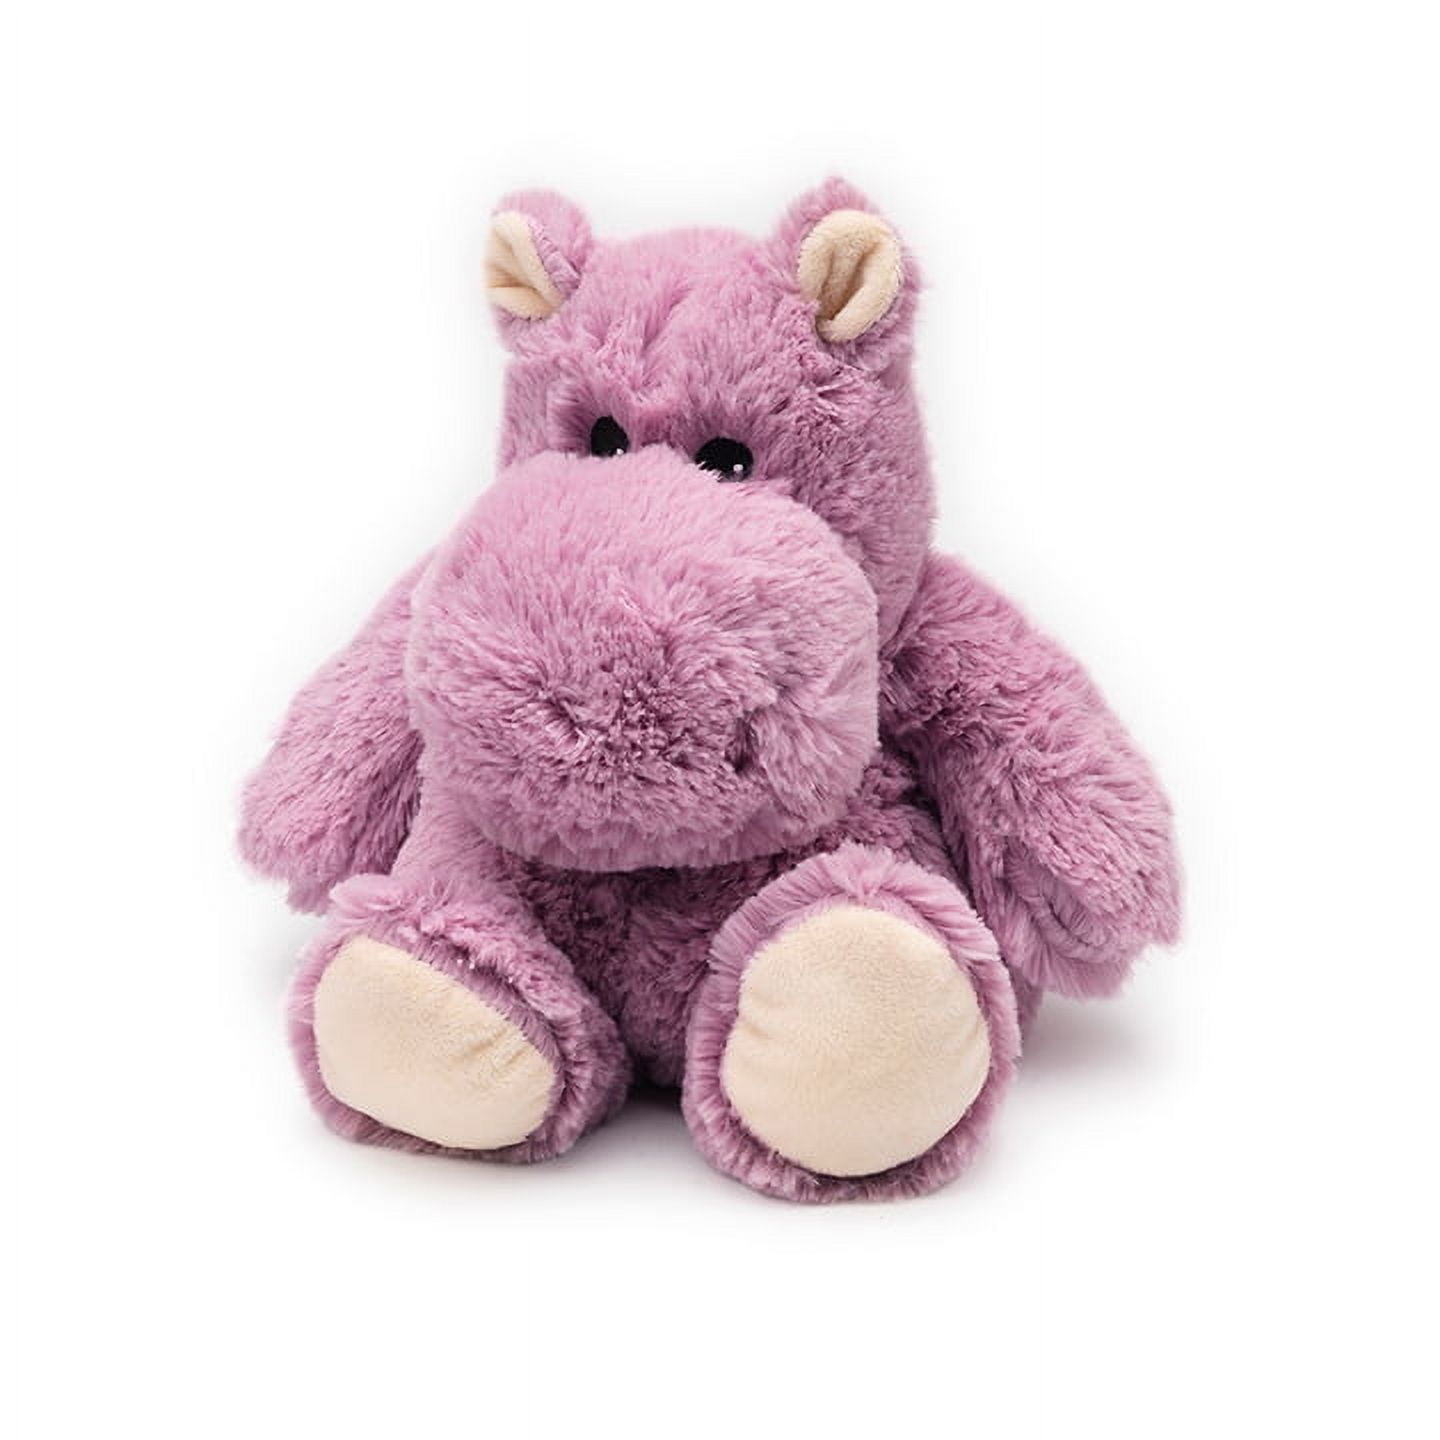 Picture of Warmies 6050650 Plush Stuffed Animal, Purple